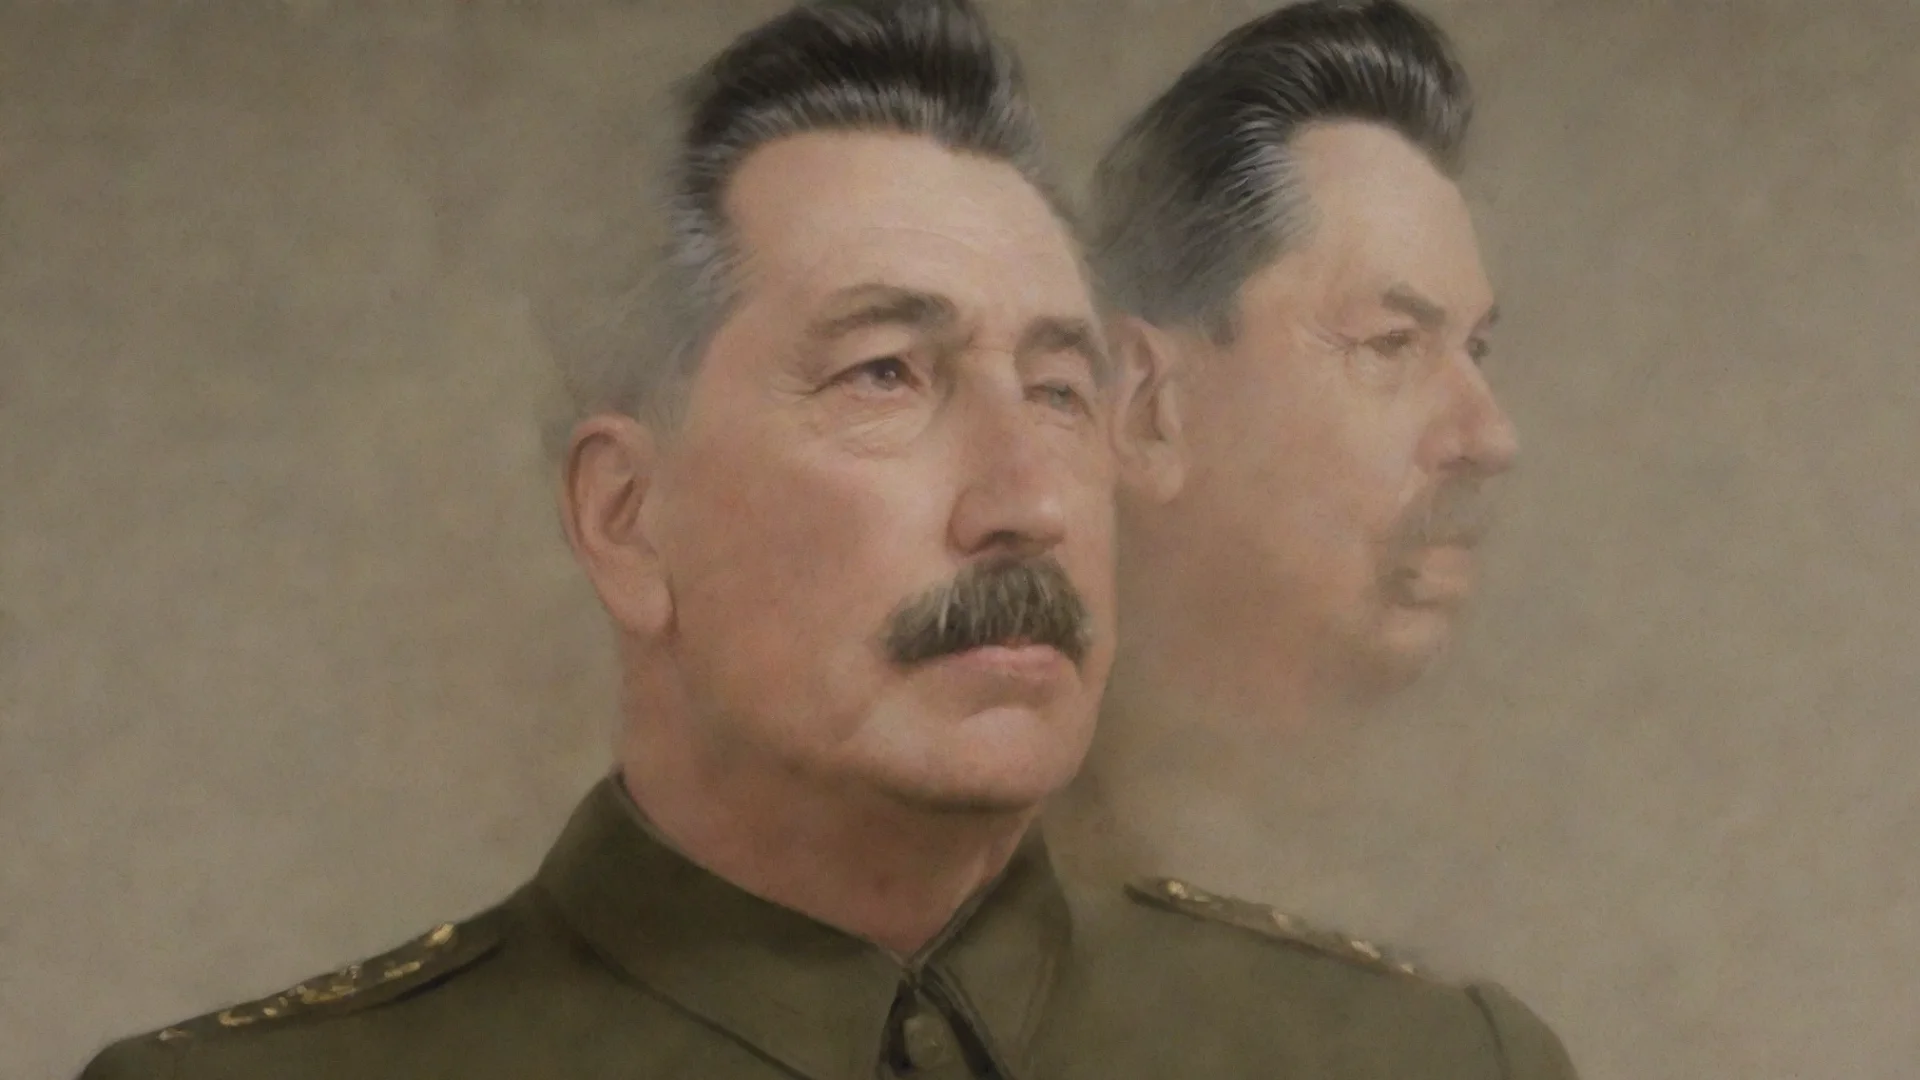 amazing joseph stalin awesome portrait 2 wide